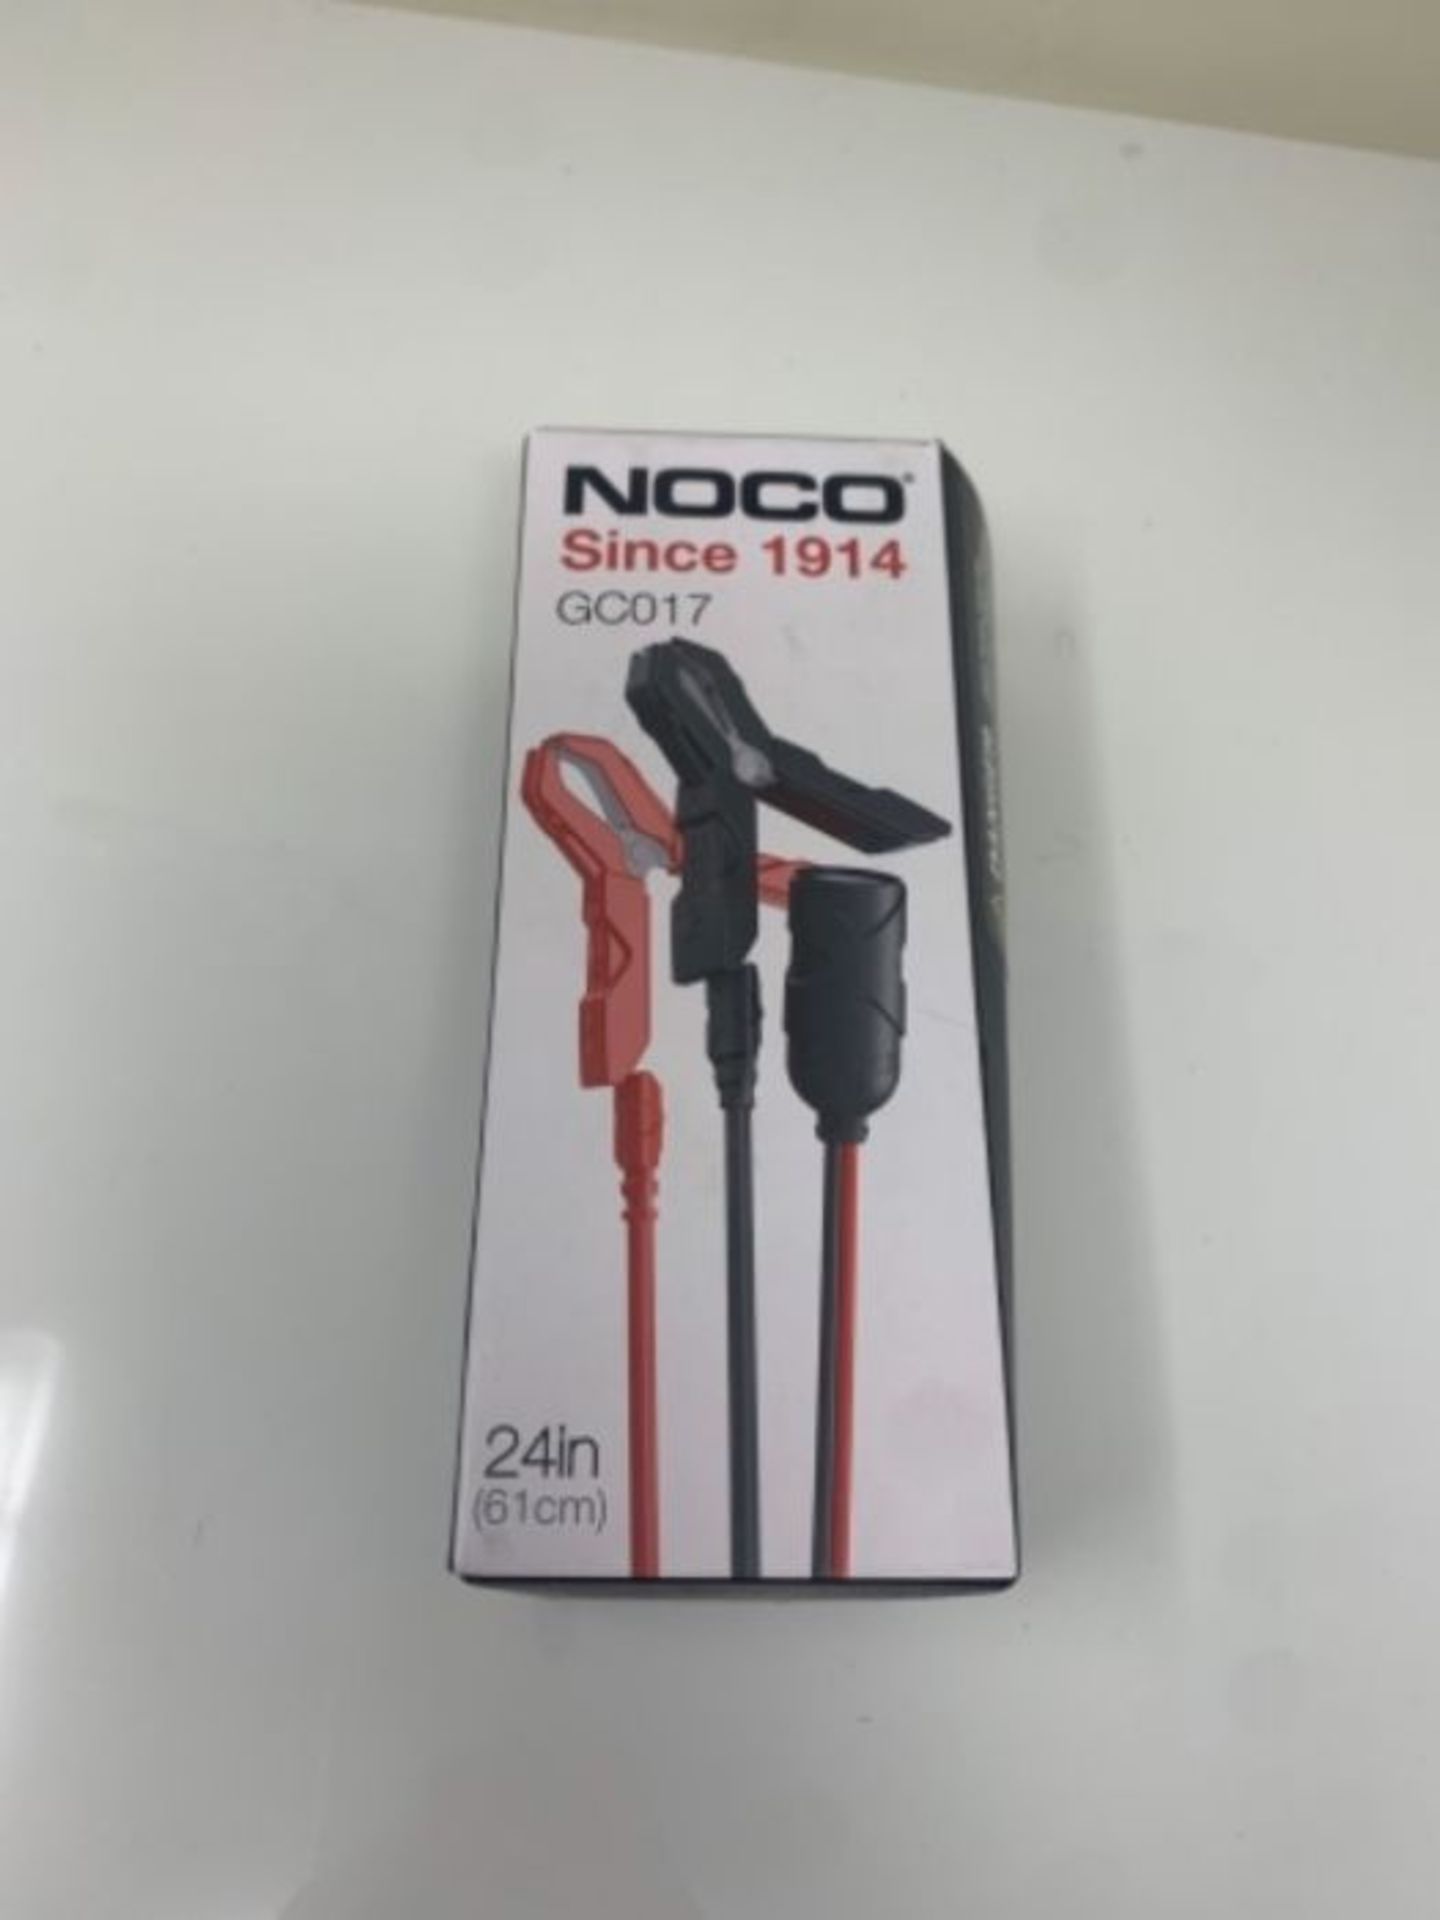 NOCO GC017 Socket Plug - Image 2 of 3